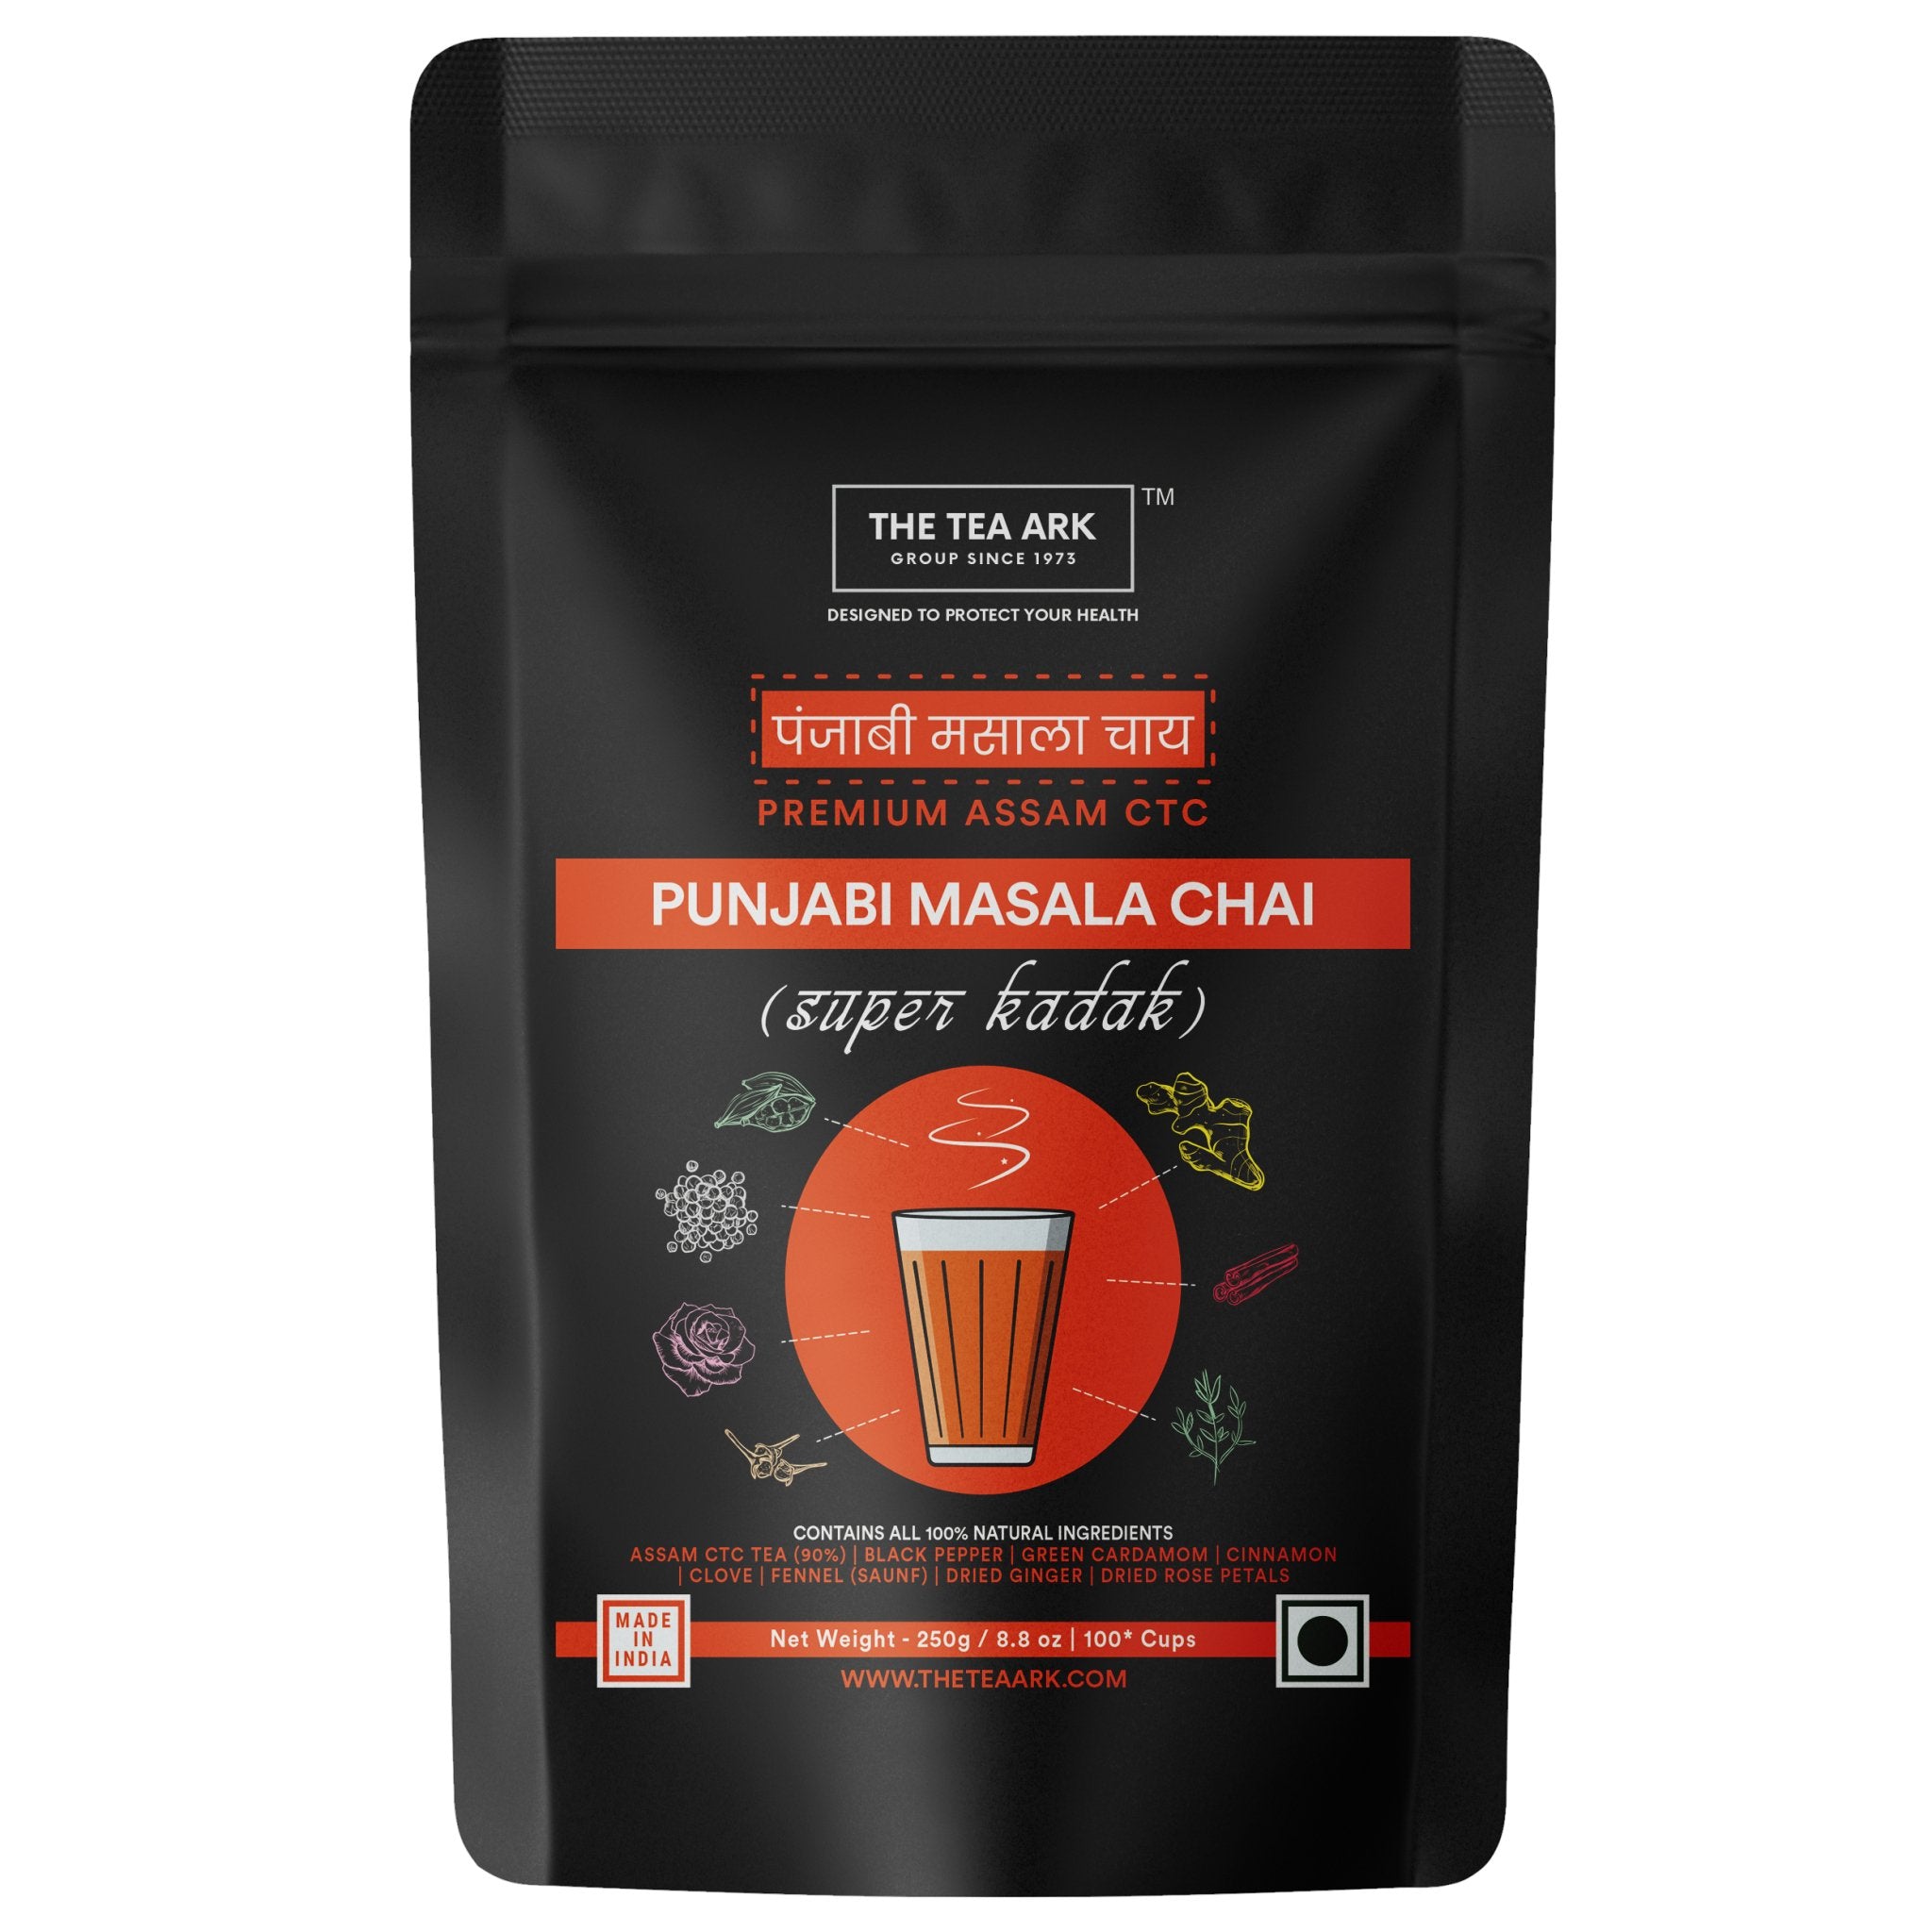 The Tea Ark Punjabi Masala Chai, Super Kadak with Premium Assam CTC, 250g - Inlife Pharma Private Limited